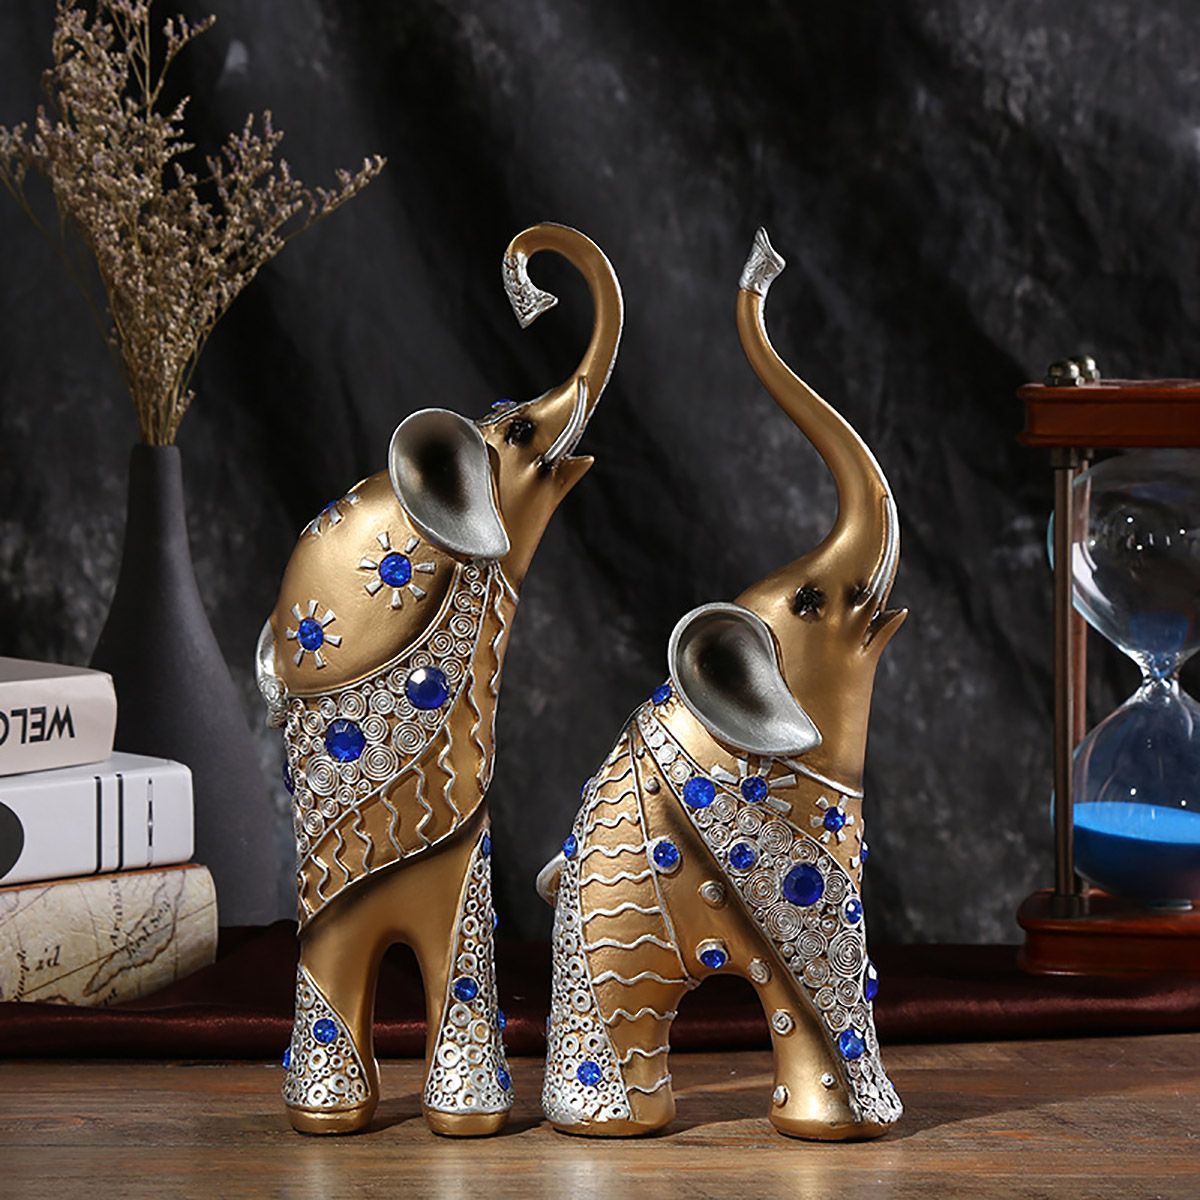 Elephant-Statue-Mother-Son-Art-Resin-Craft-Ornament-Home-Desktop-Table-Decorations-1624728